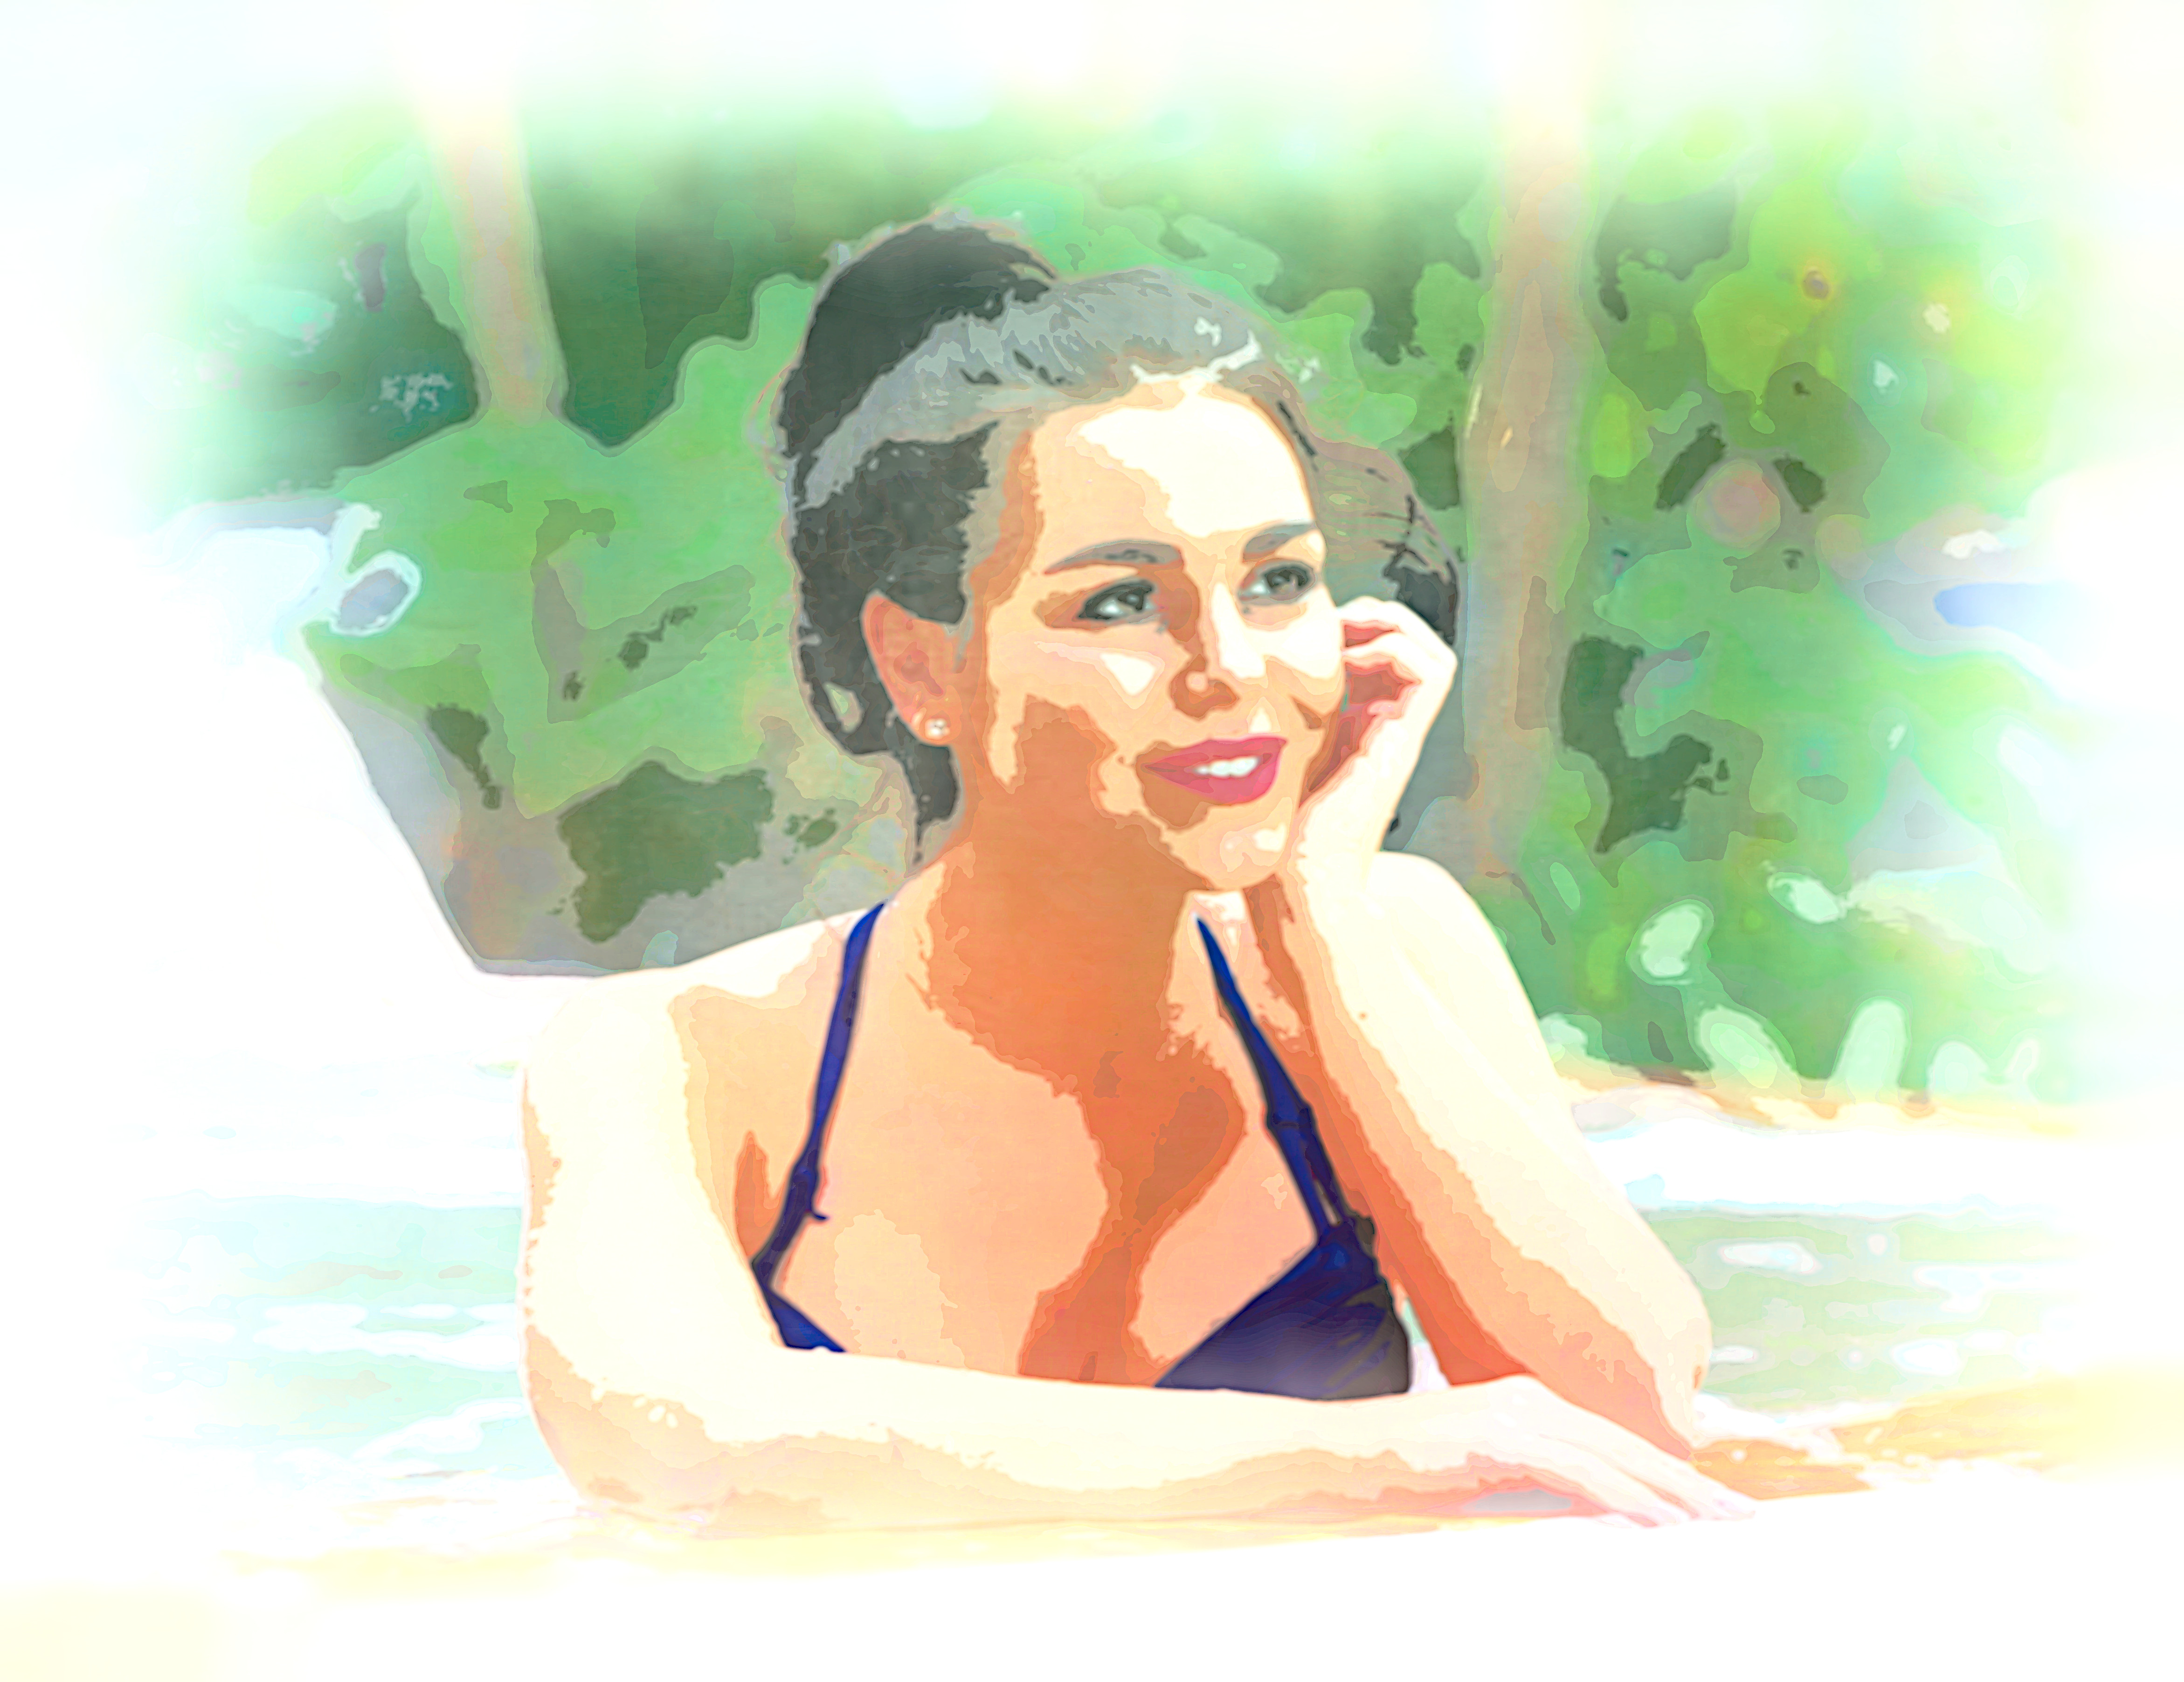 2020-05-11 09-51-14 bikini-woman-relaxation-water-3967827 as a digital aquarel, using18 colours, source portrait, look delicate plus.jpg